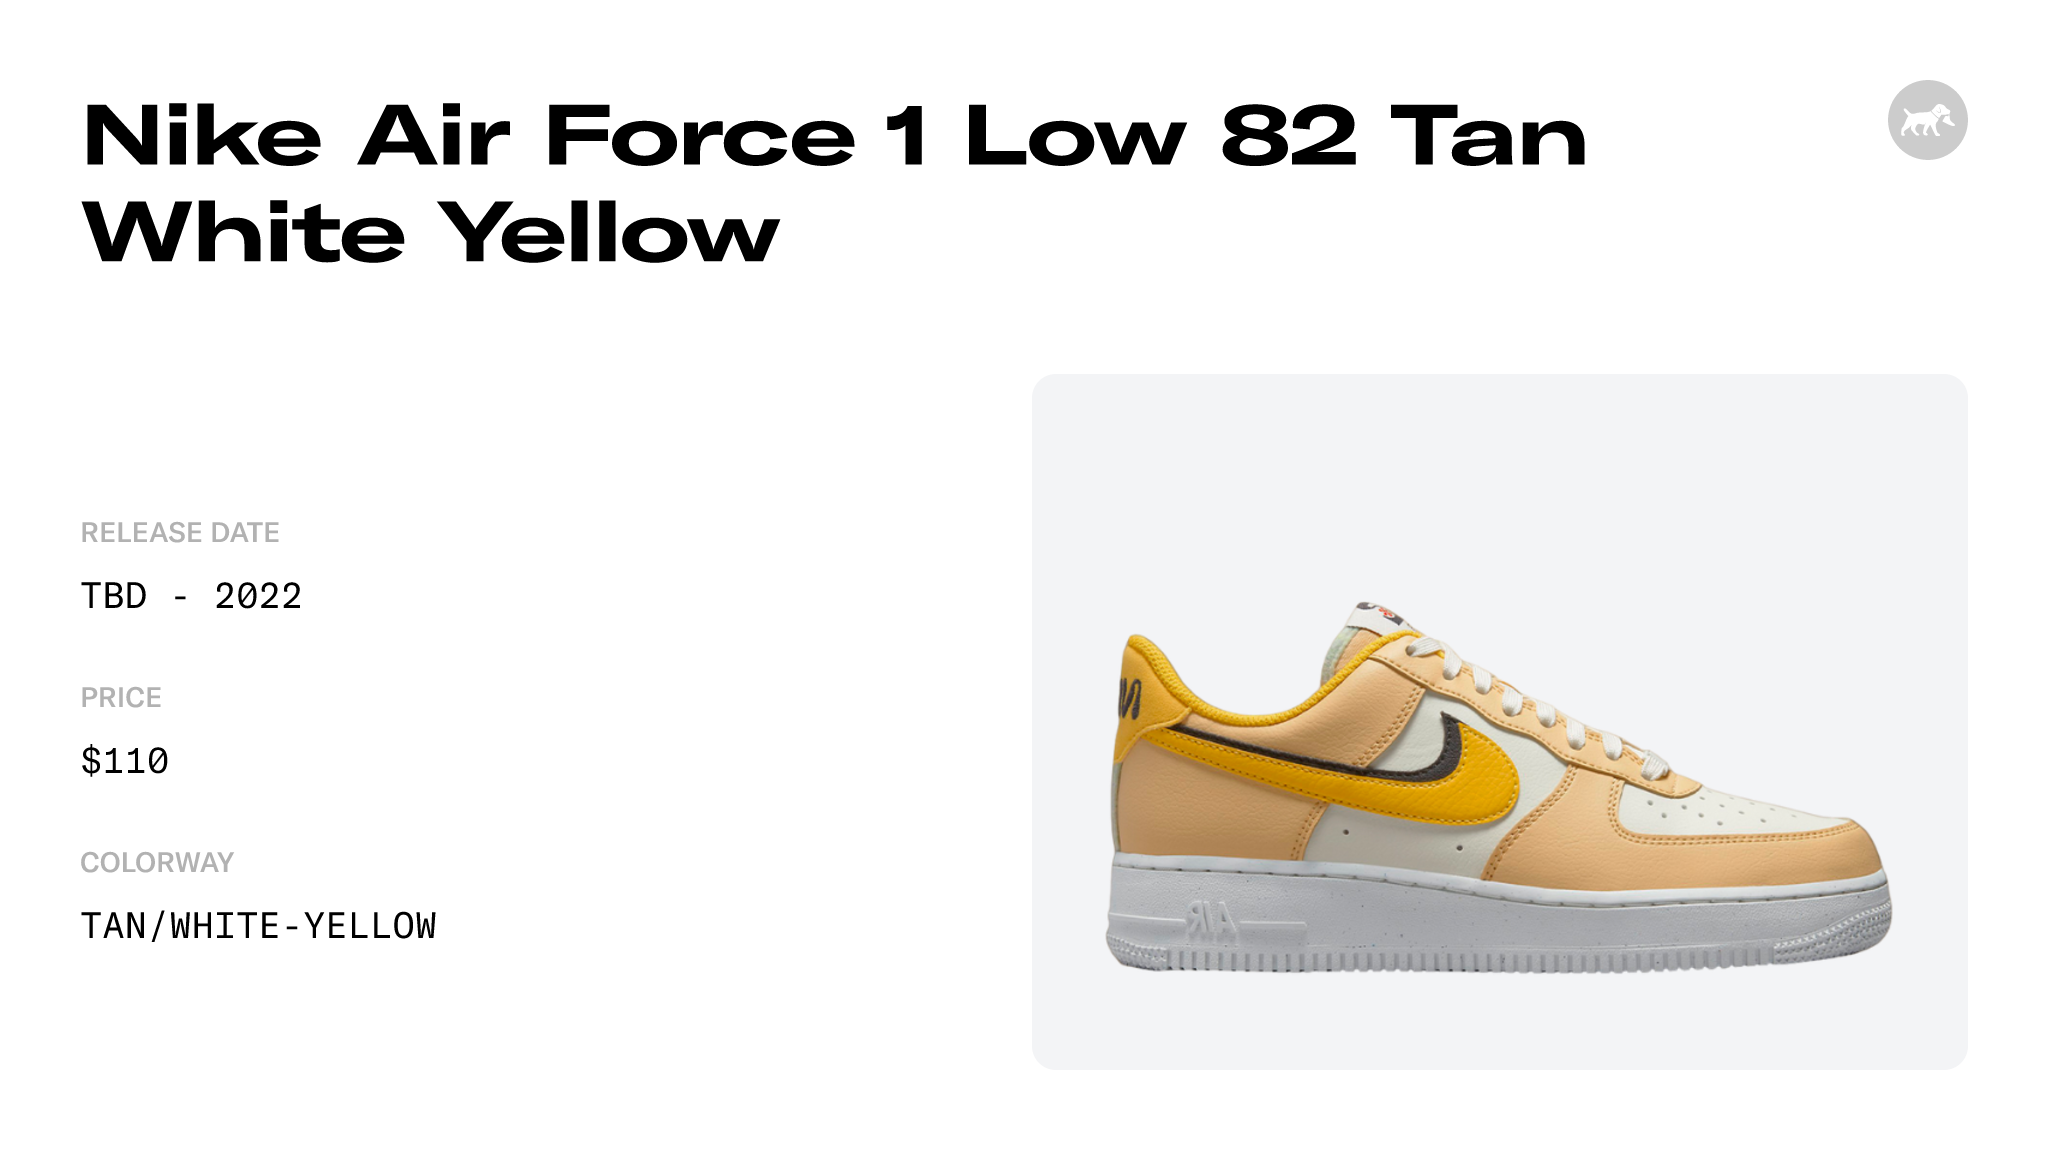 Nike Air Force 1 Low 82 White Tan DX6065-171